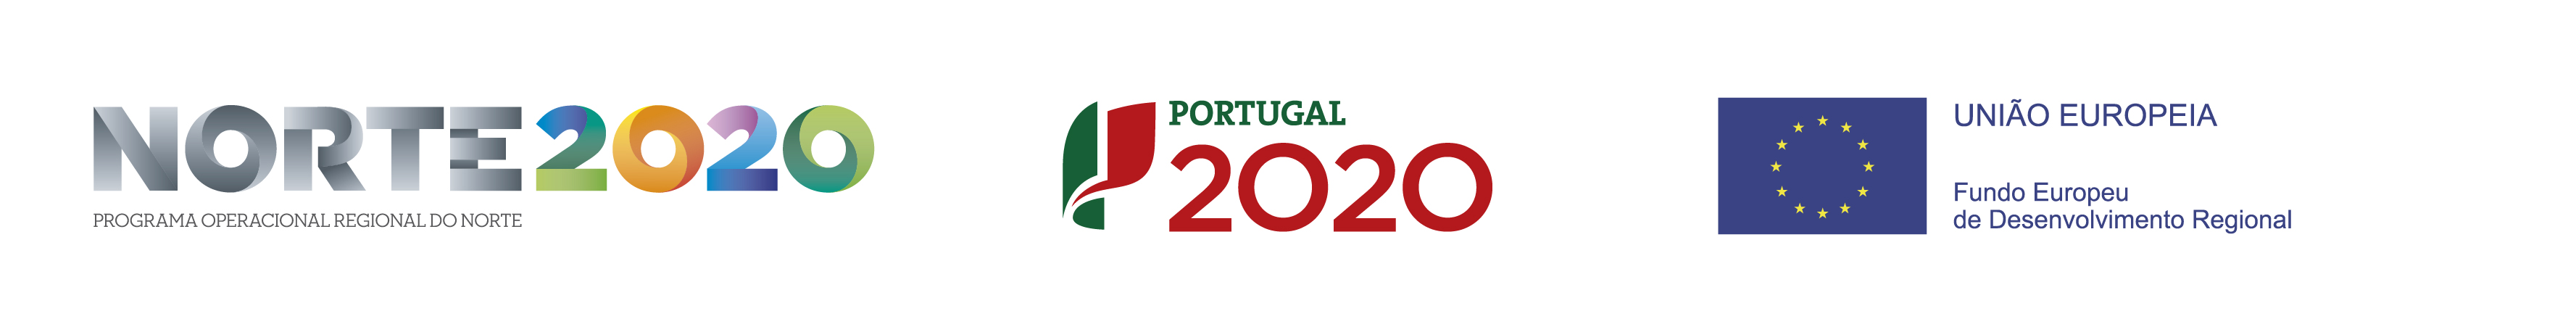 norte 2020